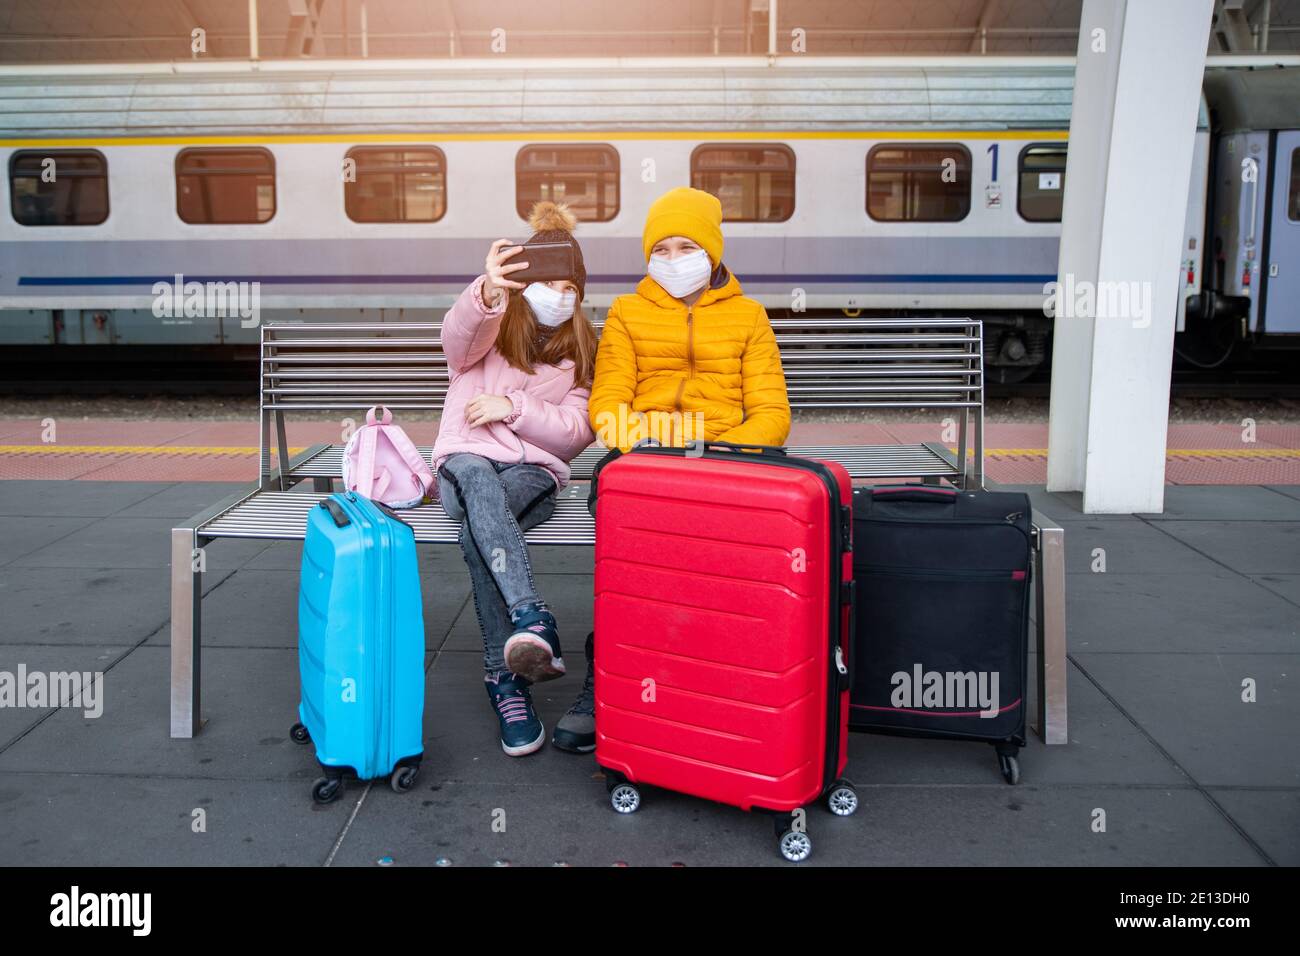 Estación de tren maletas fotografías e imágenes de alta resolución - Alamy